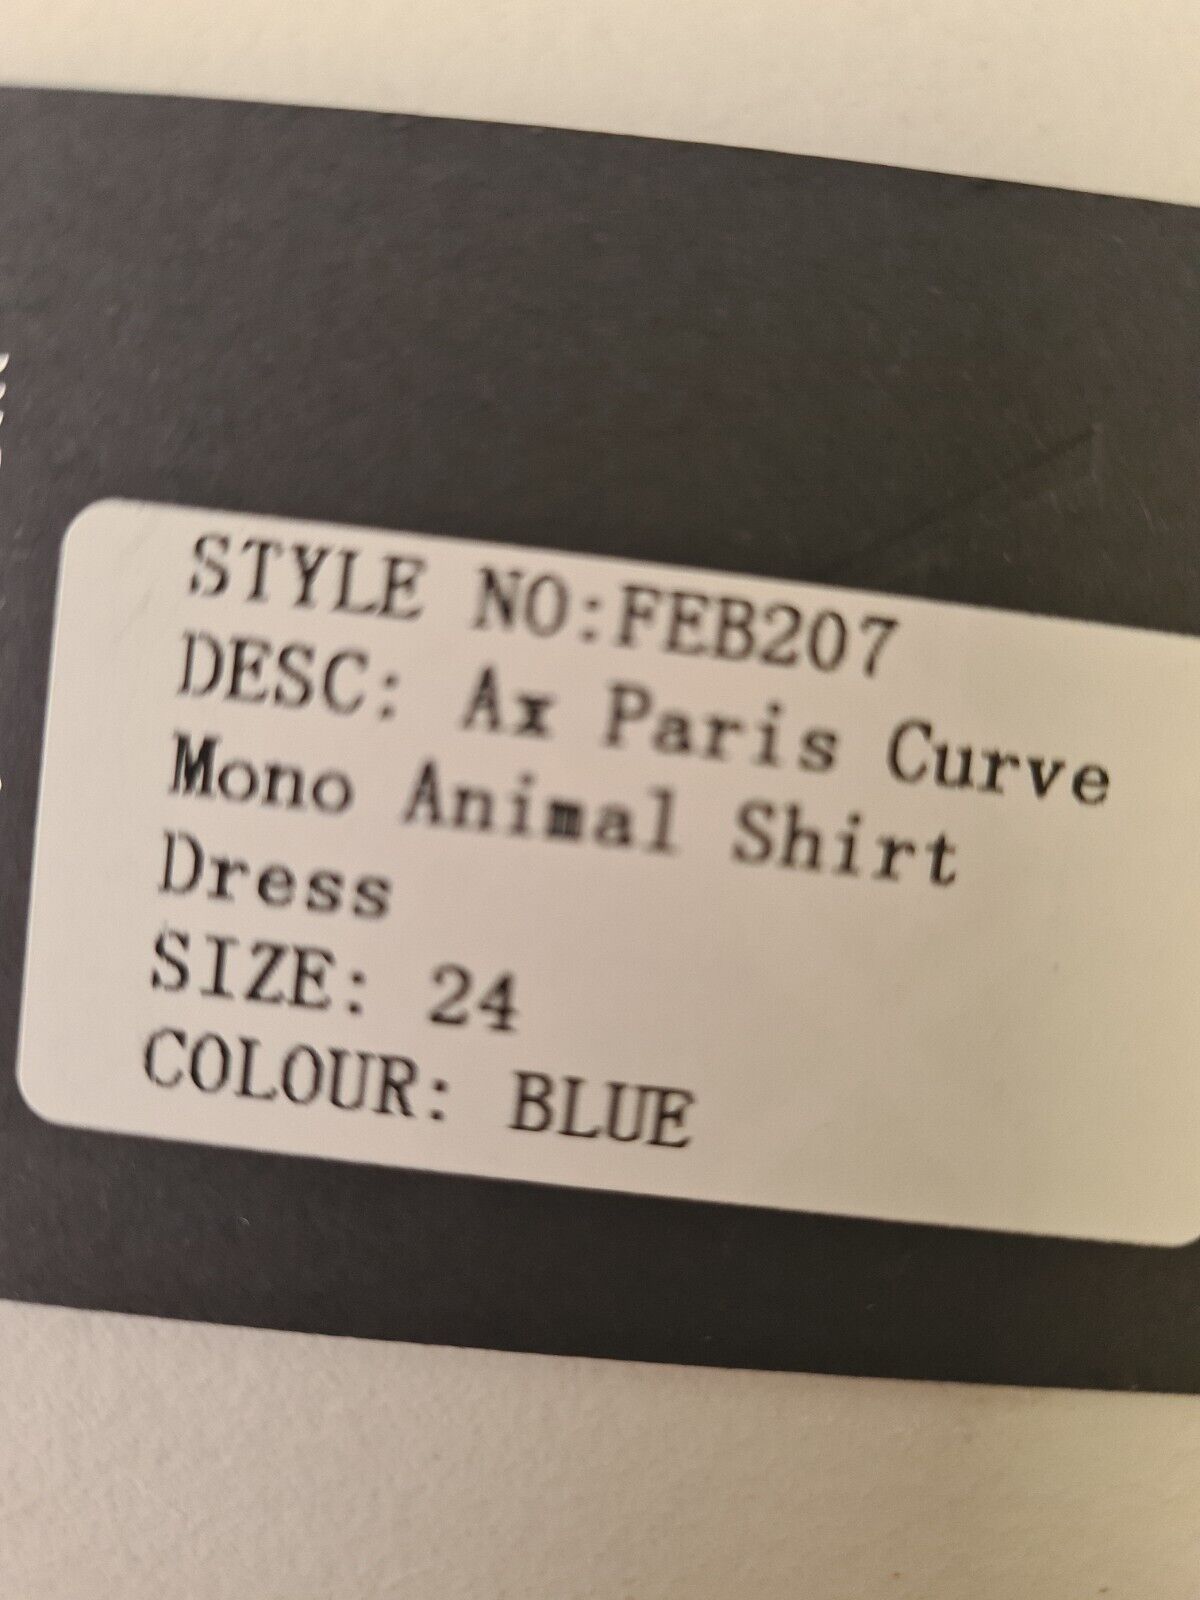 AX Paris Curve Mono Animal Print Shirt Dress Size 24 Blue **** V31L